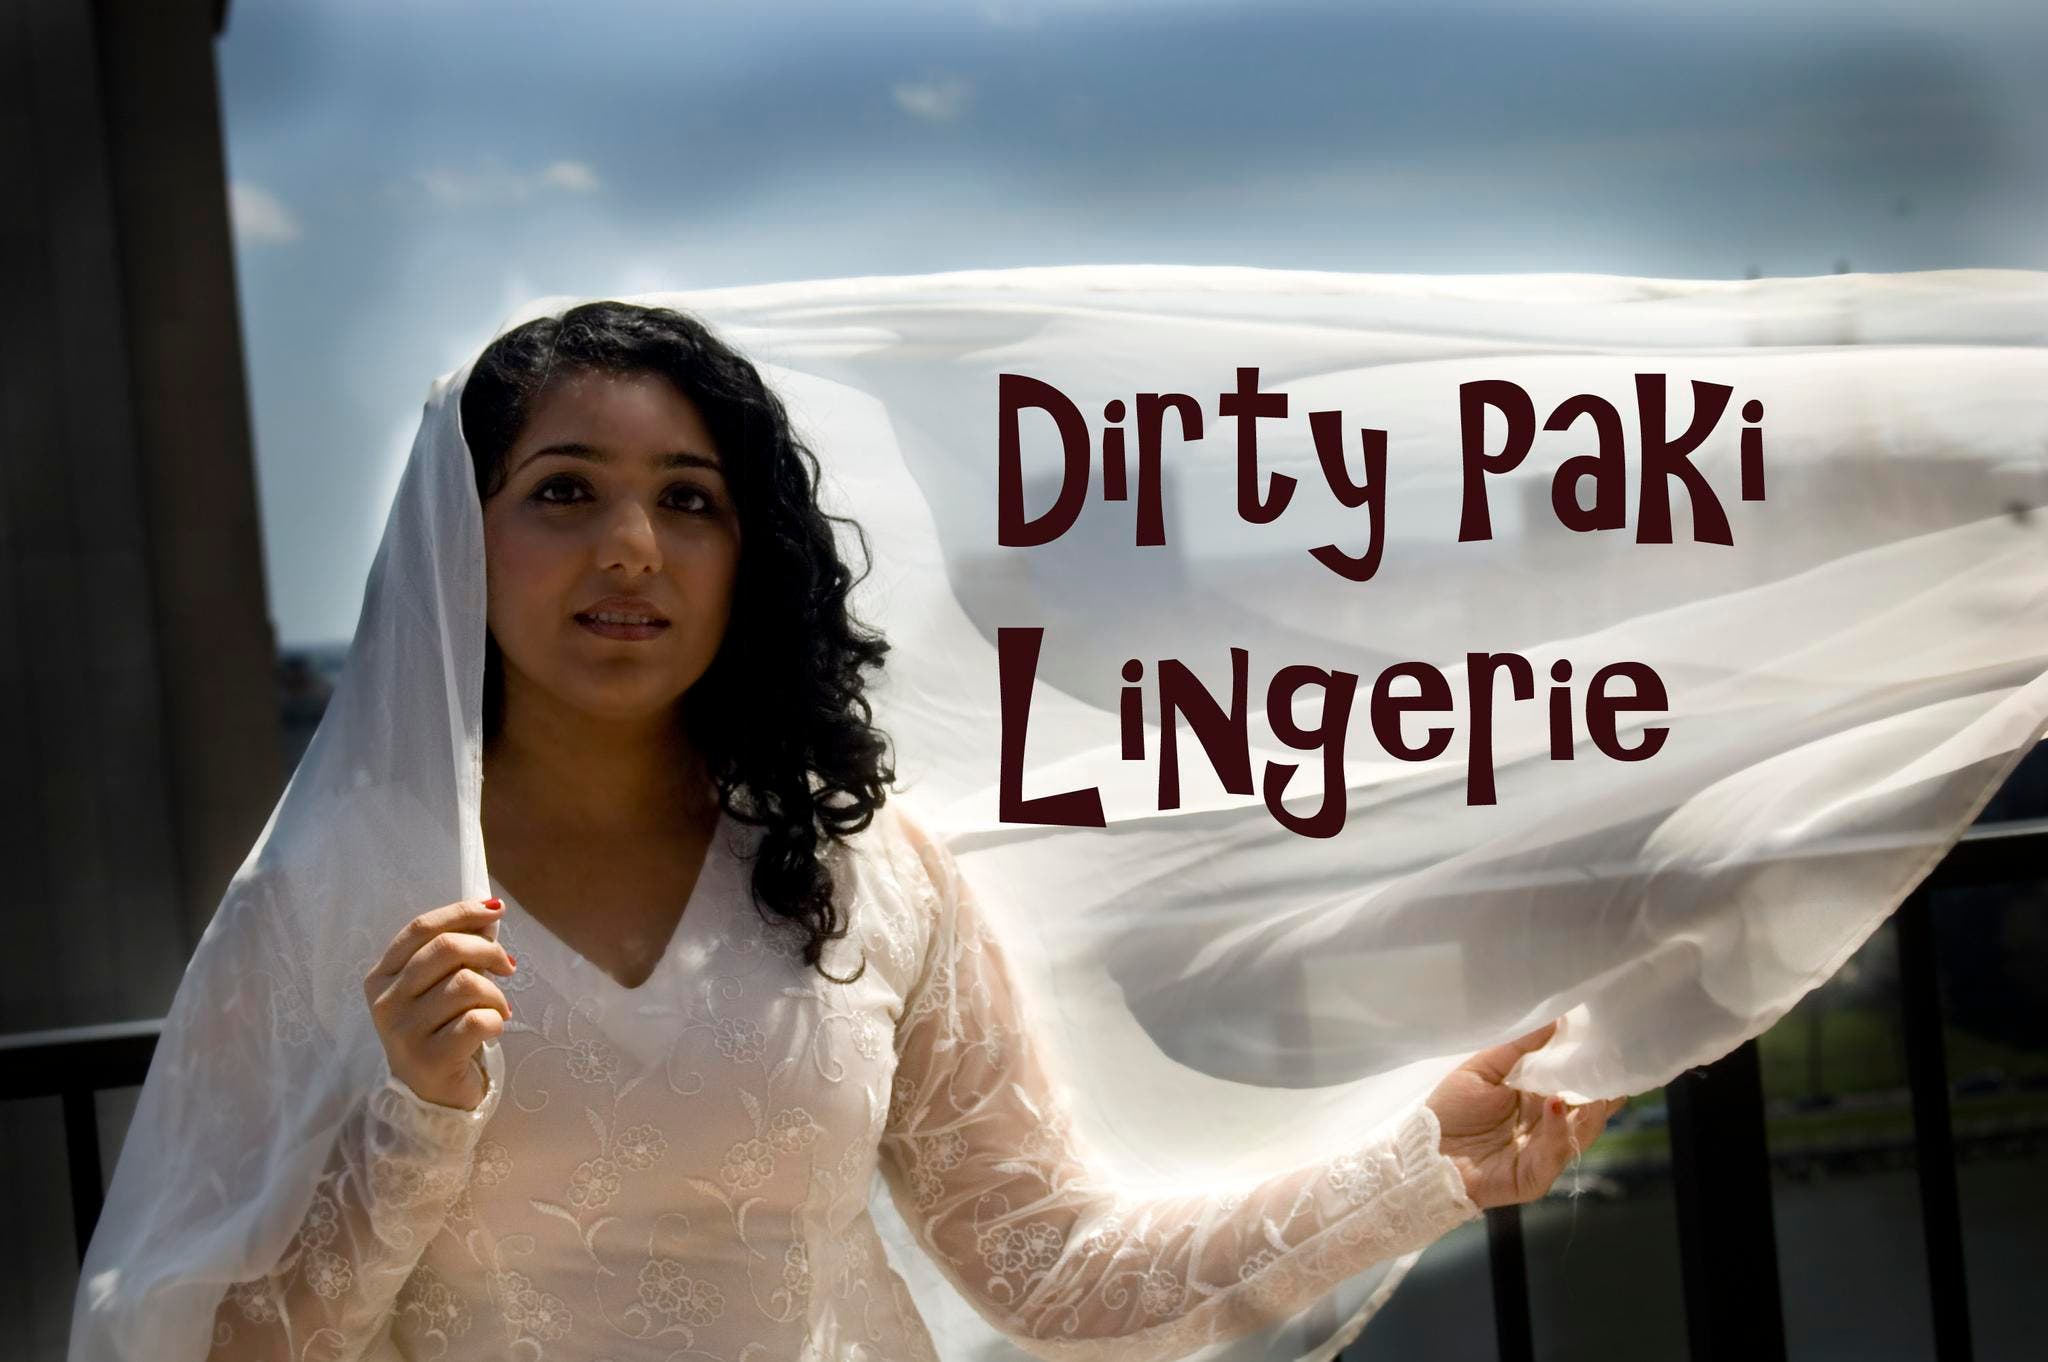 Play Dirty Paki Lingerie makes London debut after world tour Al Arabiya English image